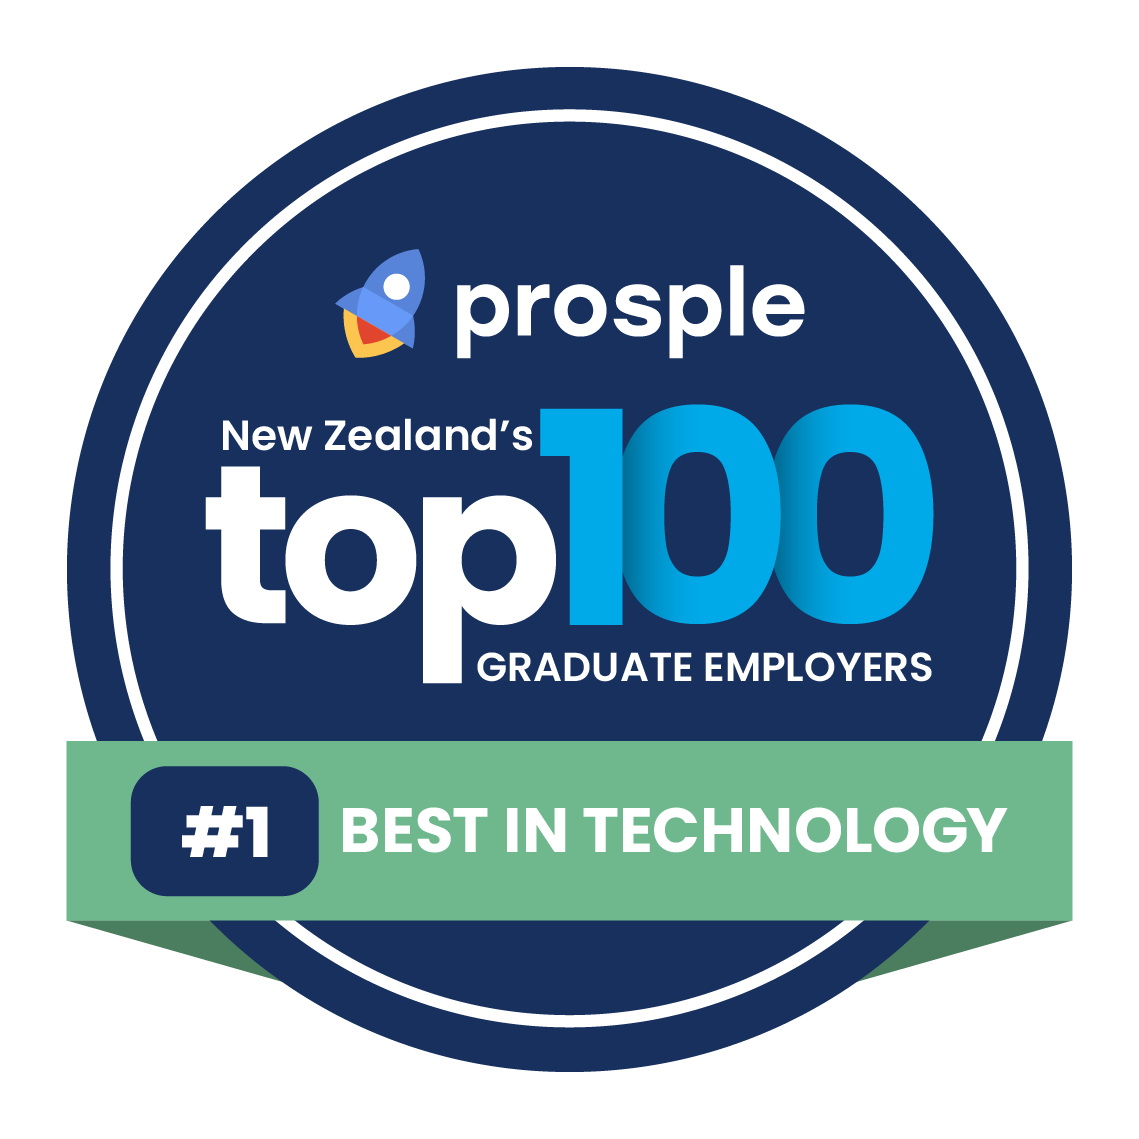 The Prosple Top 100 Graduate Employer award logo